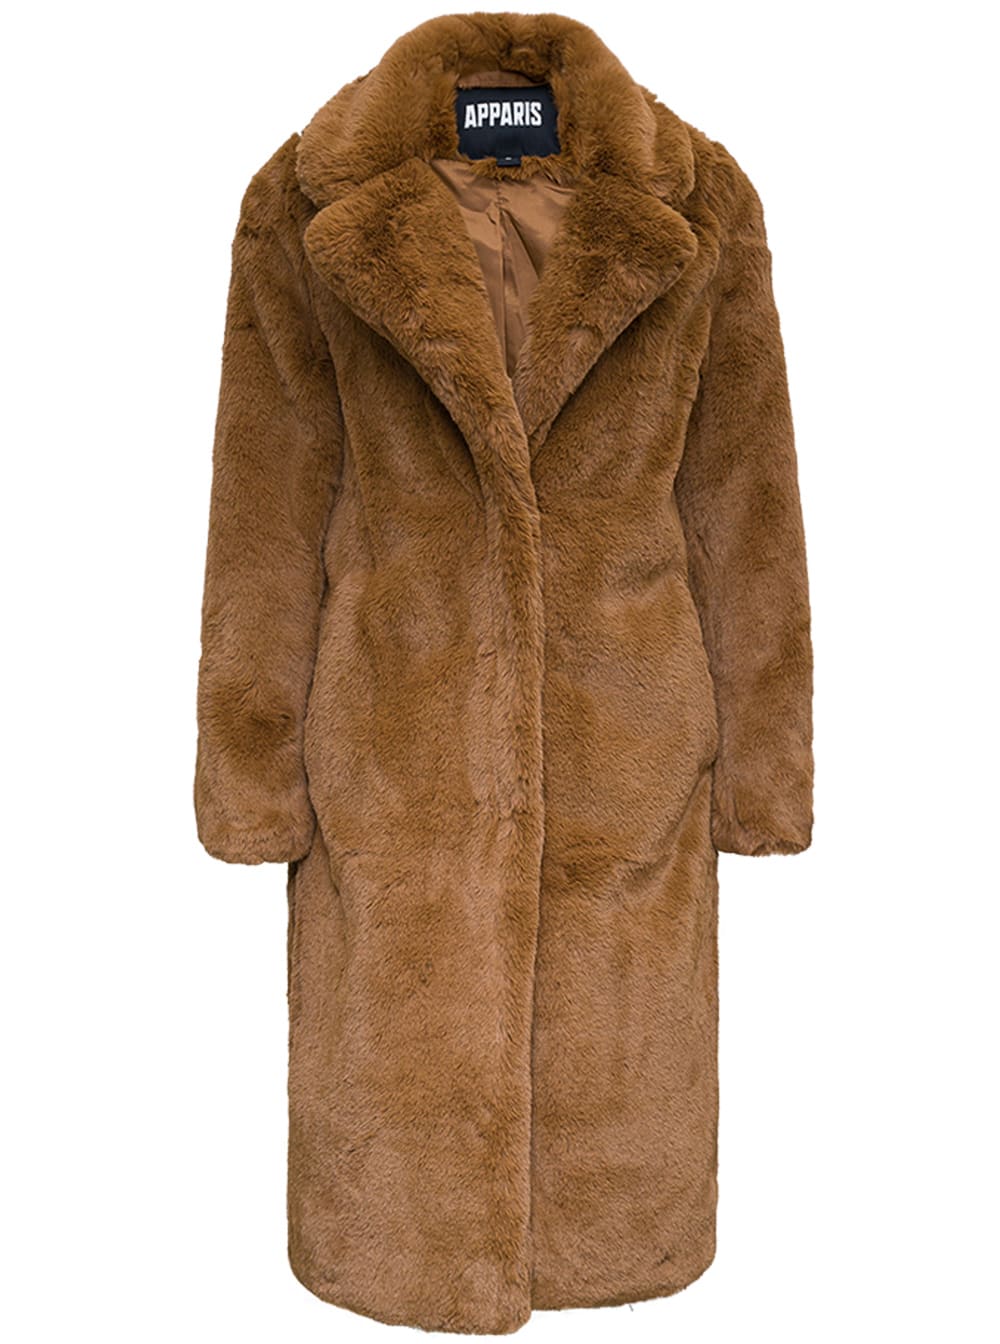 Apparis Scarlet Long Coat In Ecological Brown Fur